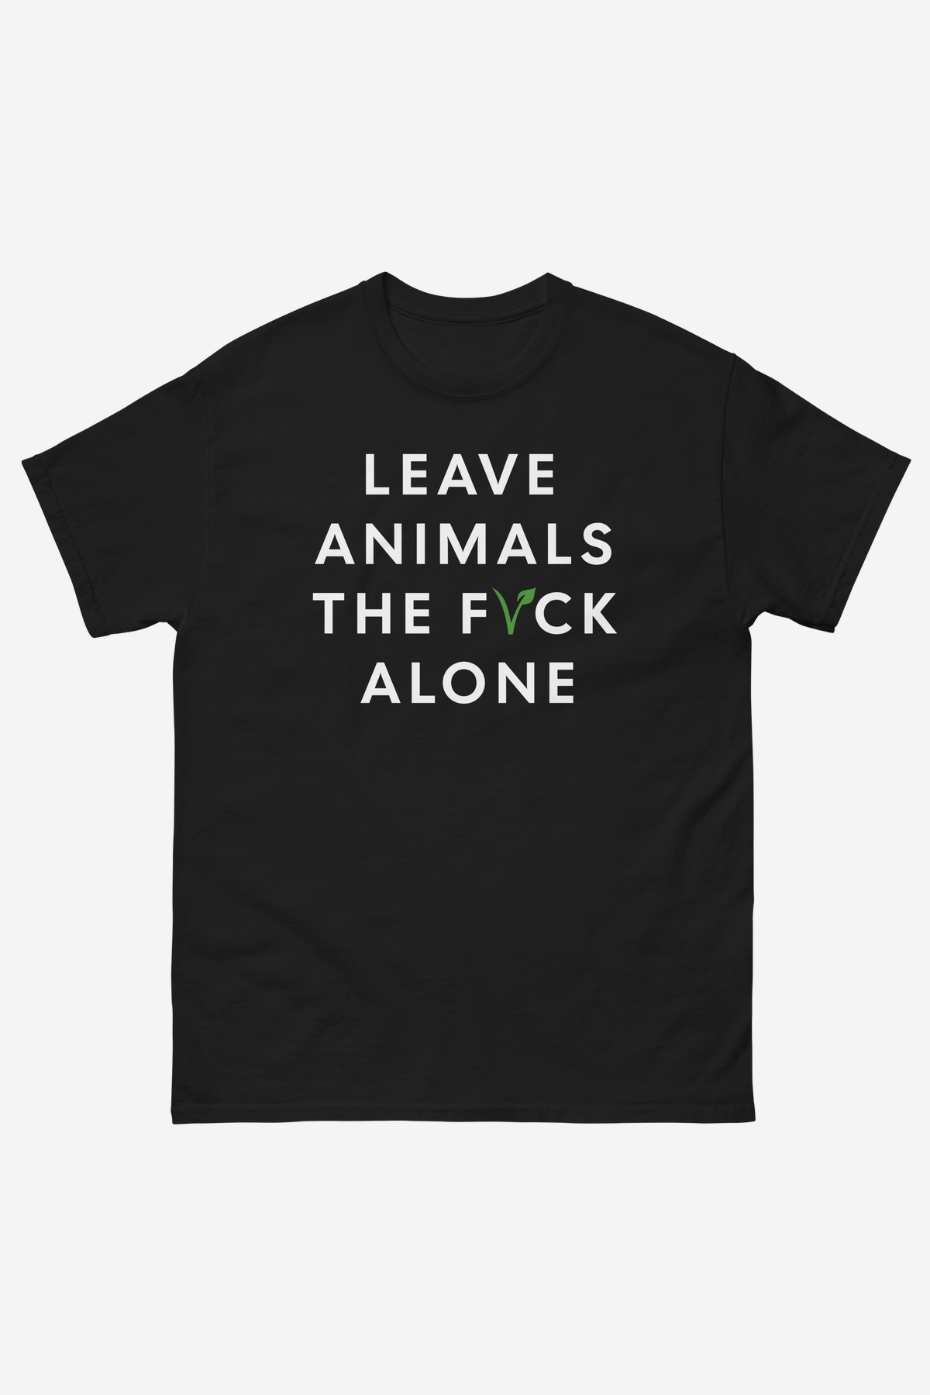 Leave Animals Alone Men's classic tee